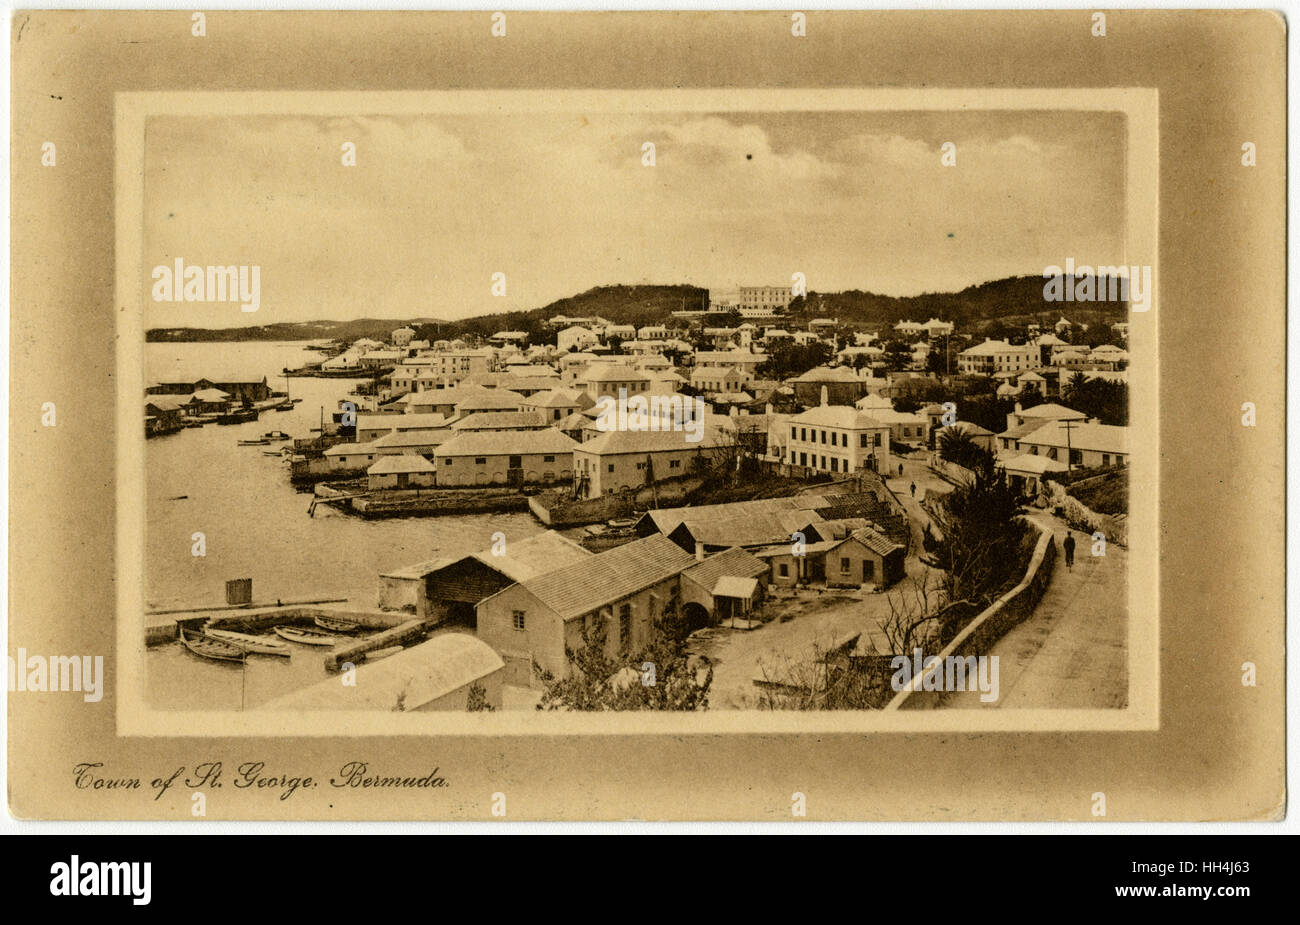 St George's, Bermuda - Waterfront Stockfoto